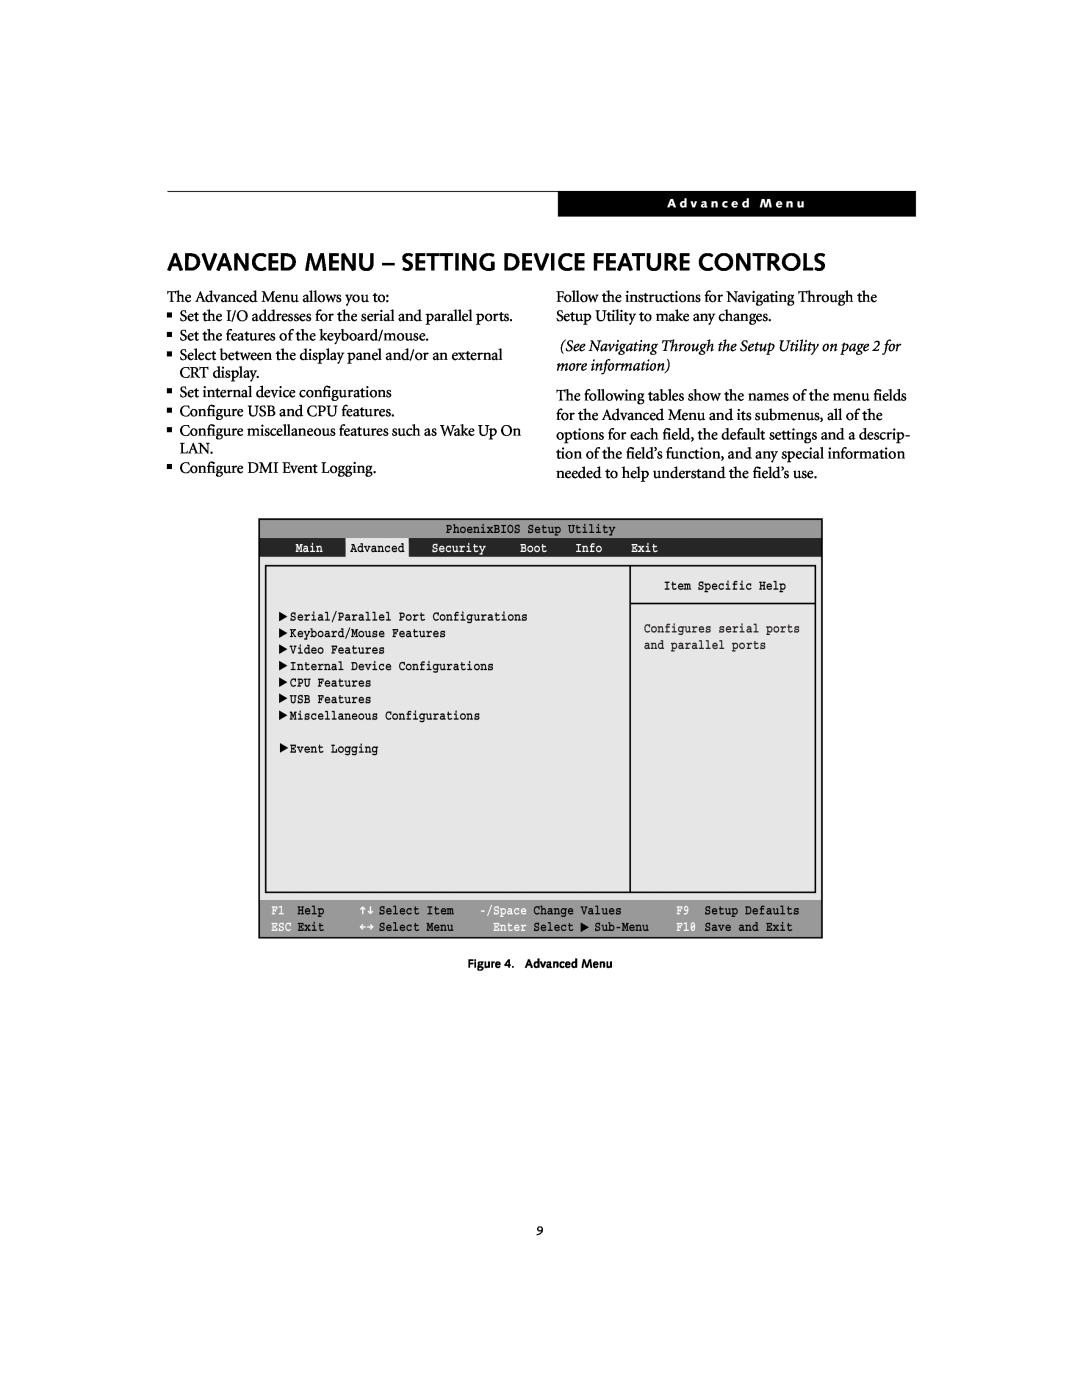 Fujitsu S7110 manual Advanced Menu - Setting Device Feature Controls 